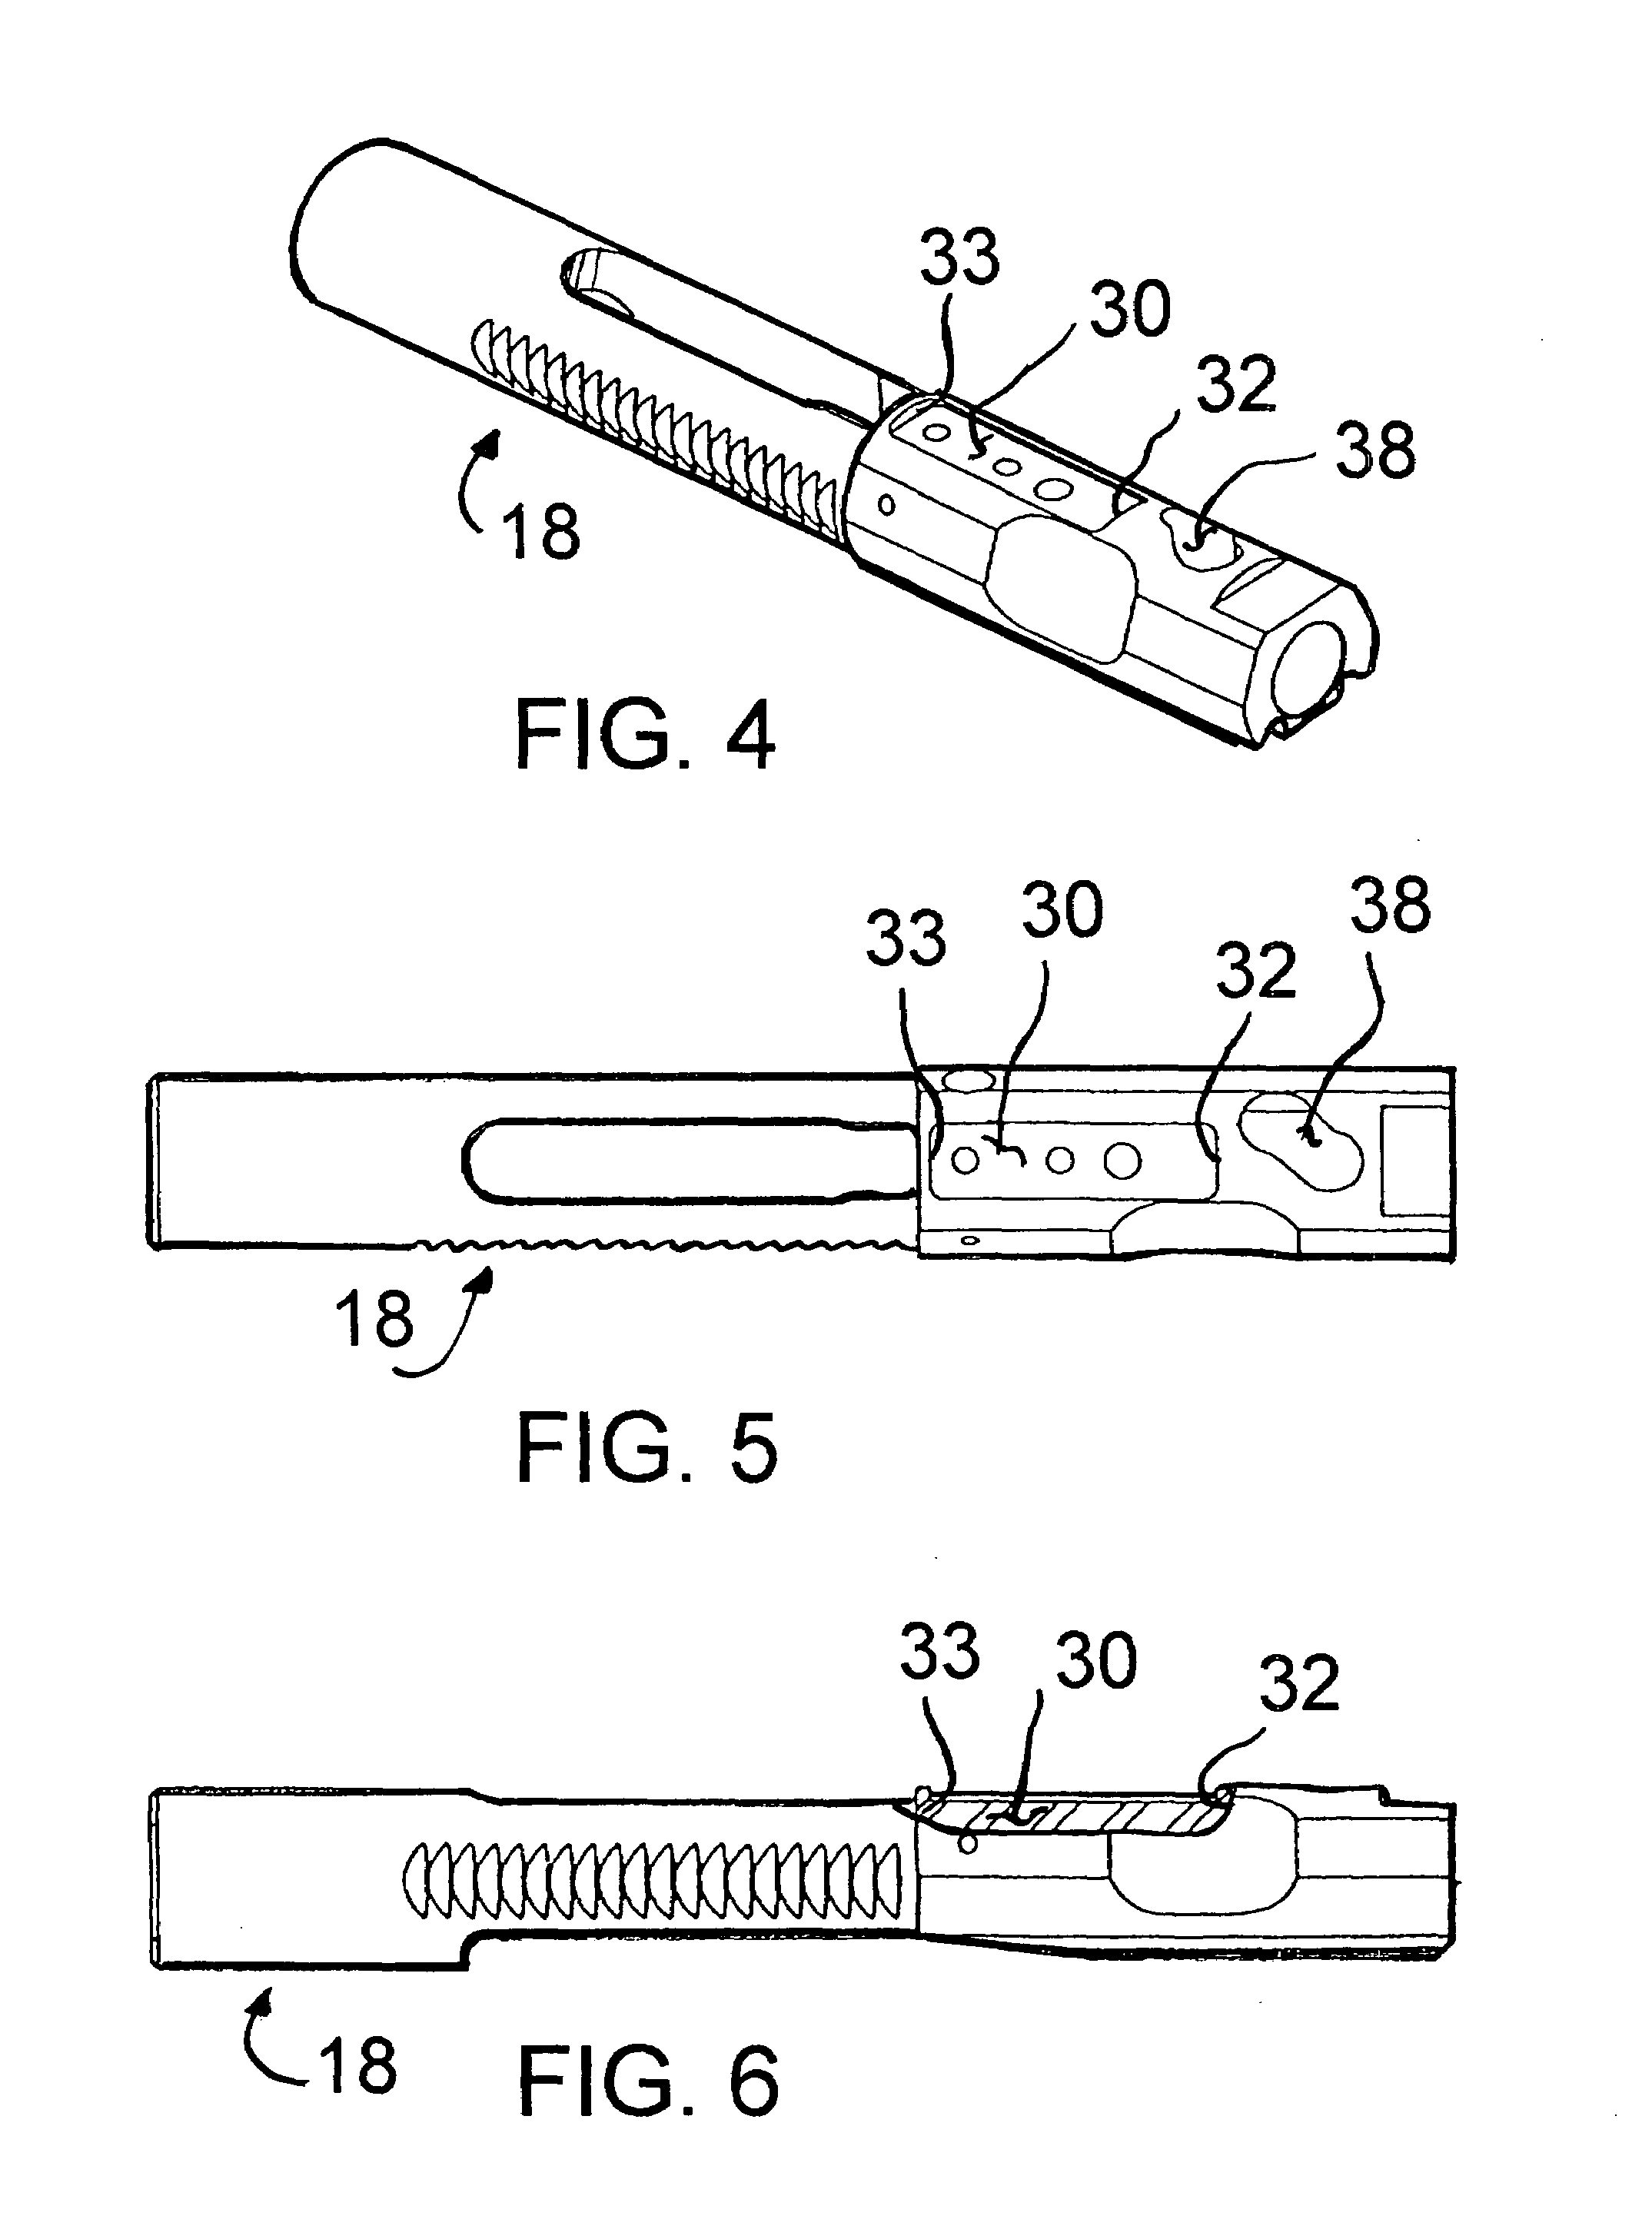 Firearm bolt carrier with mechanical/gas key